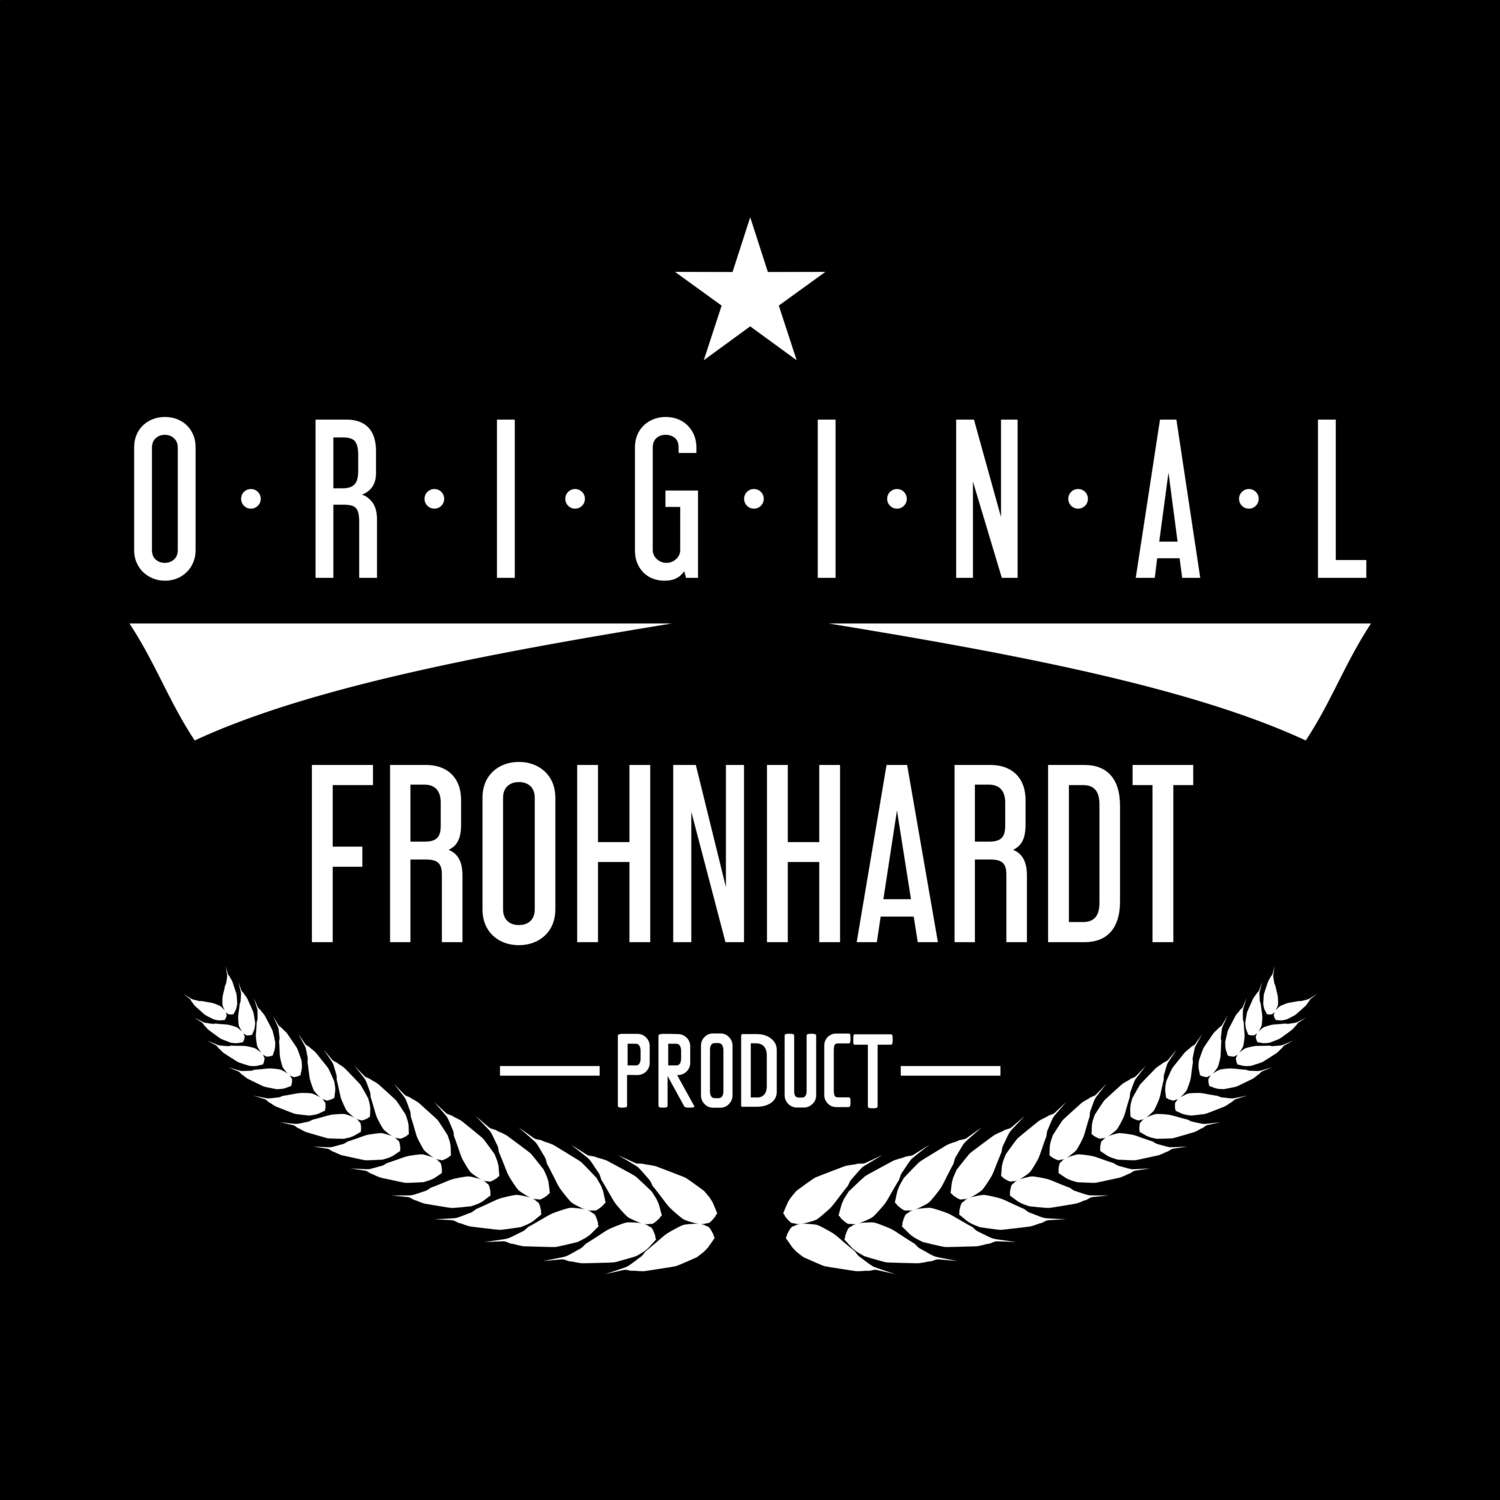 Frohnhardt T-Shirt »Original Product«